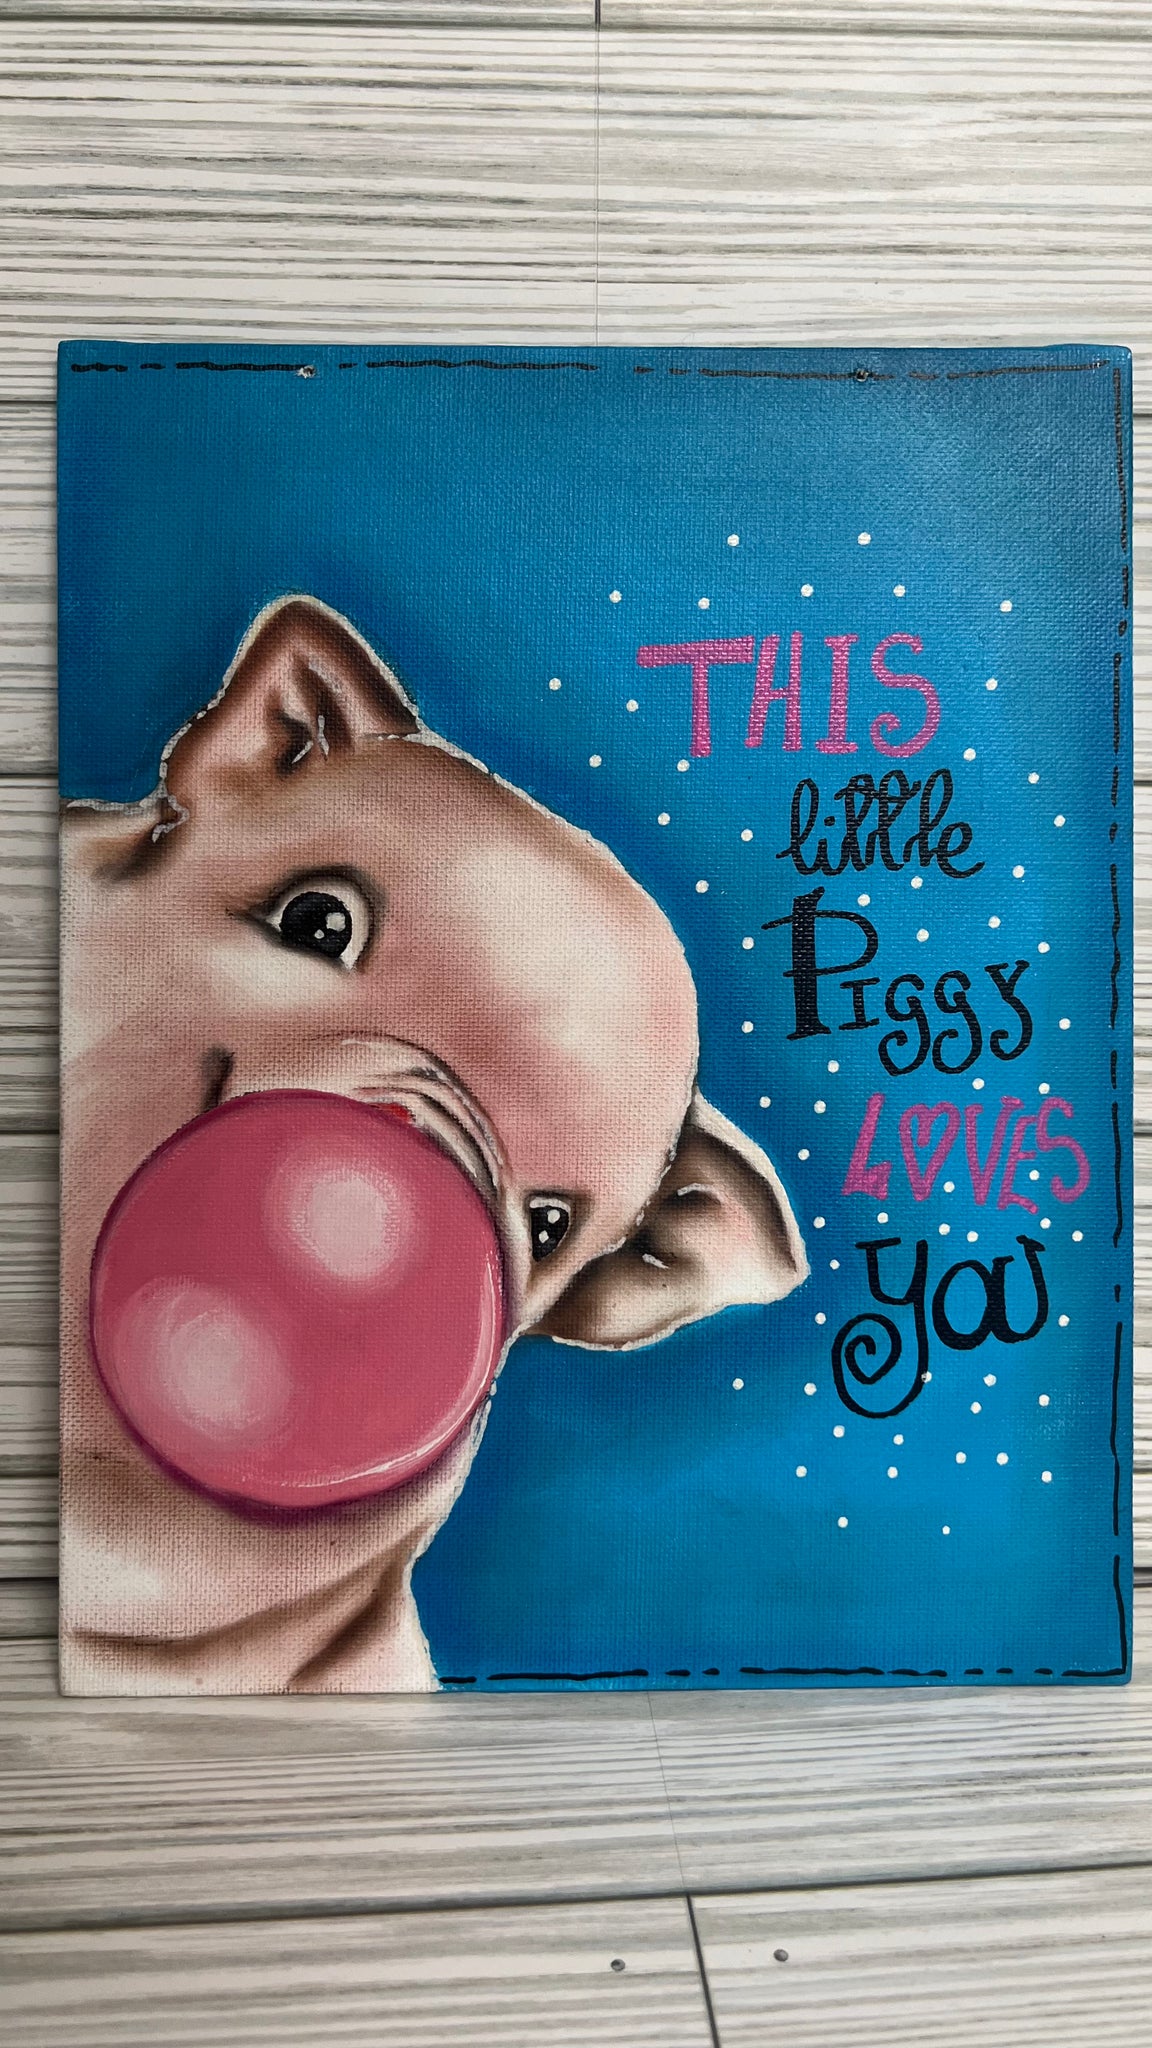 Piggy with gum